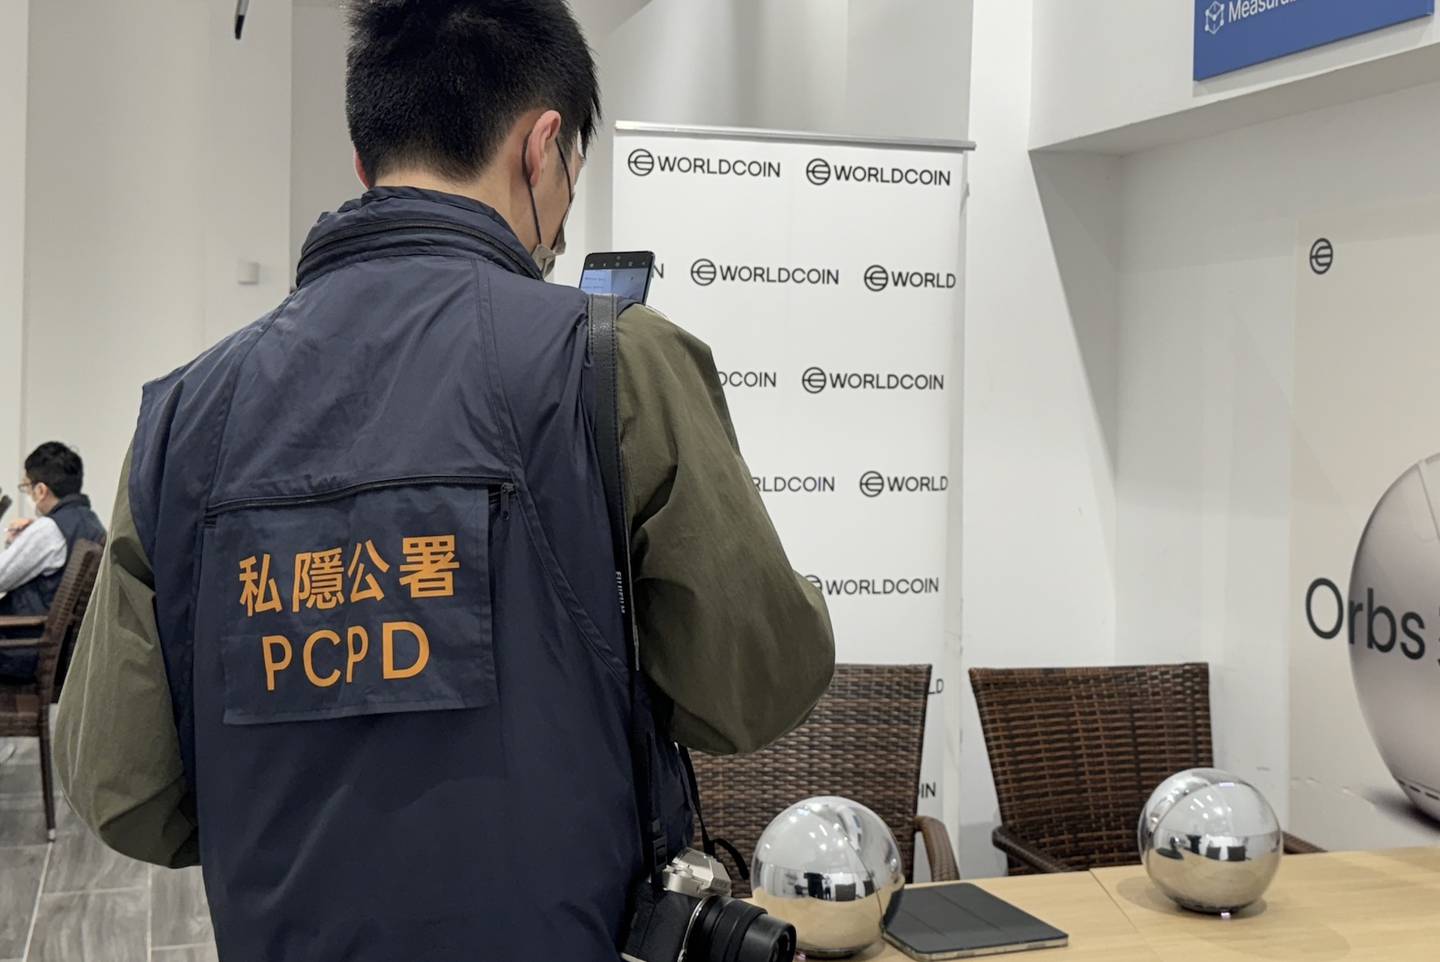 Hong Kong authorities raid Worldcoin operator stations